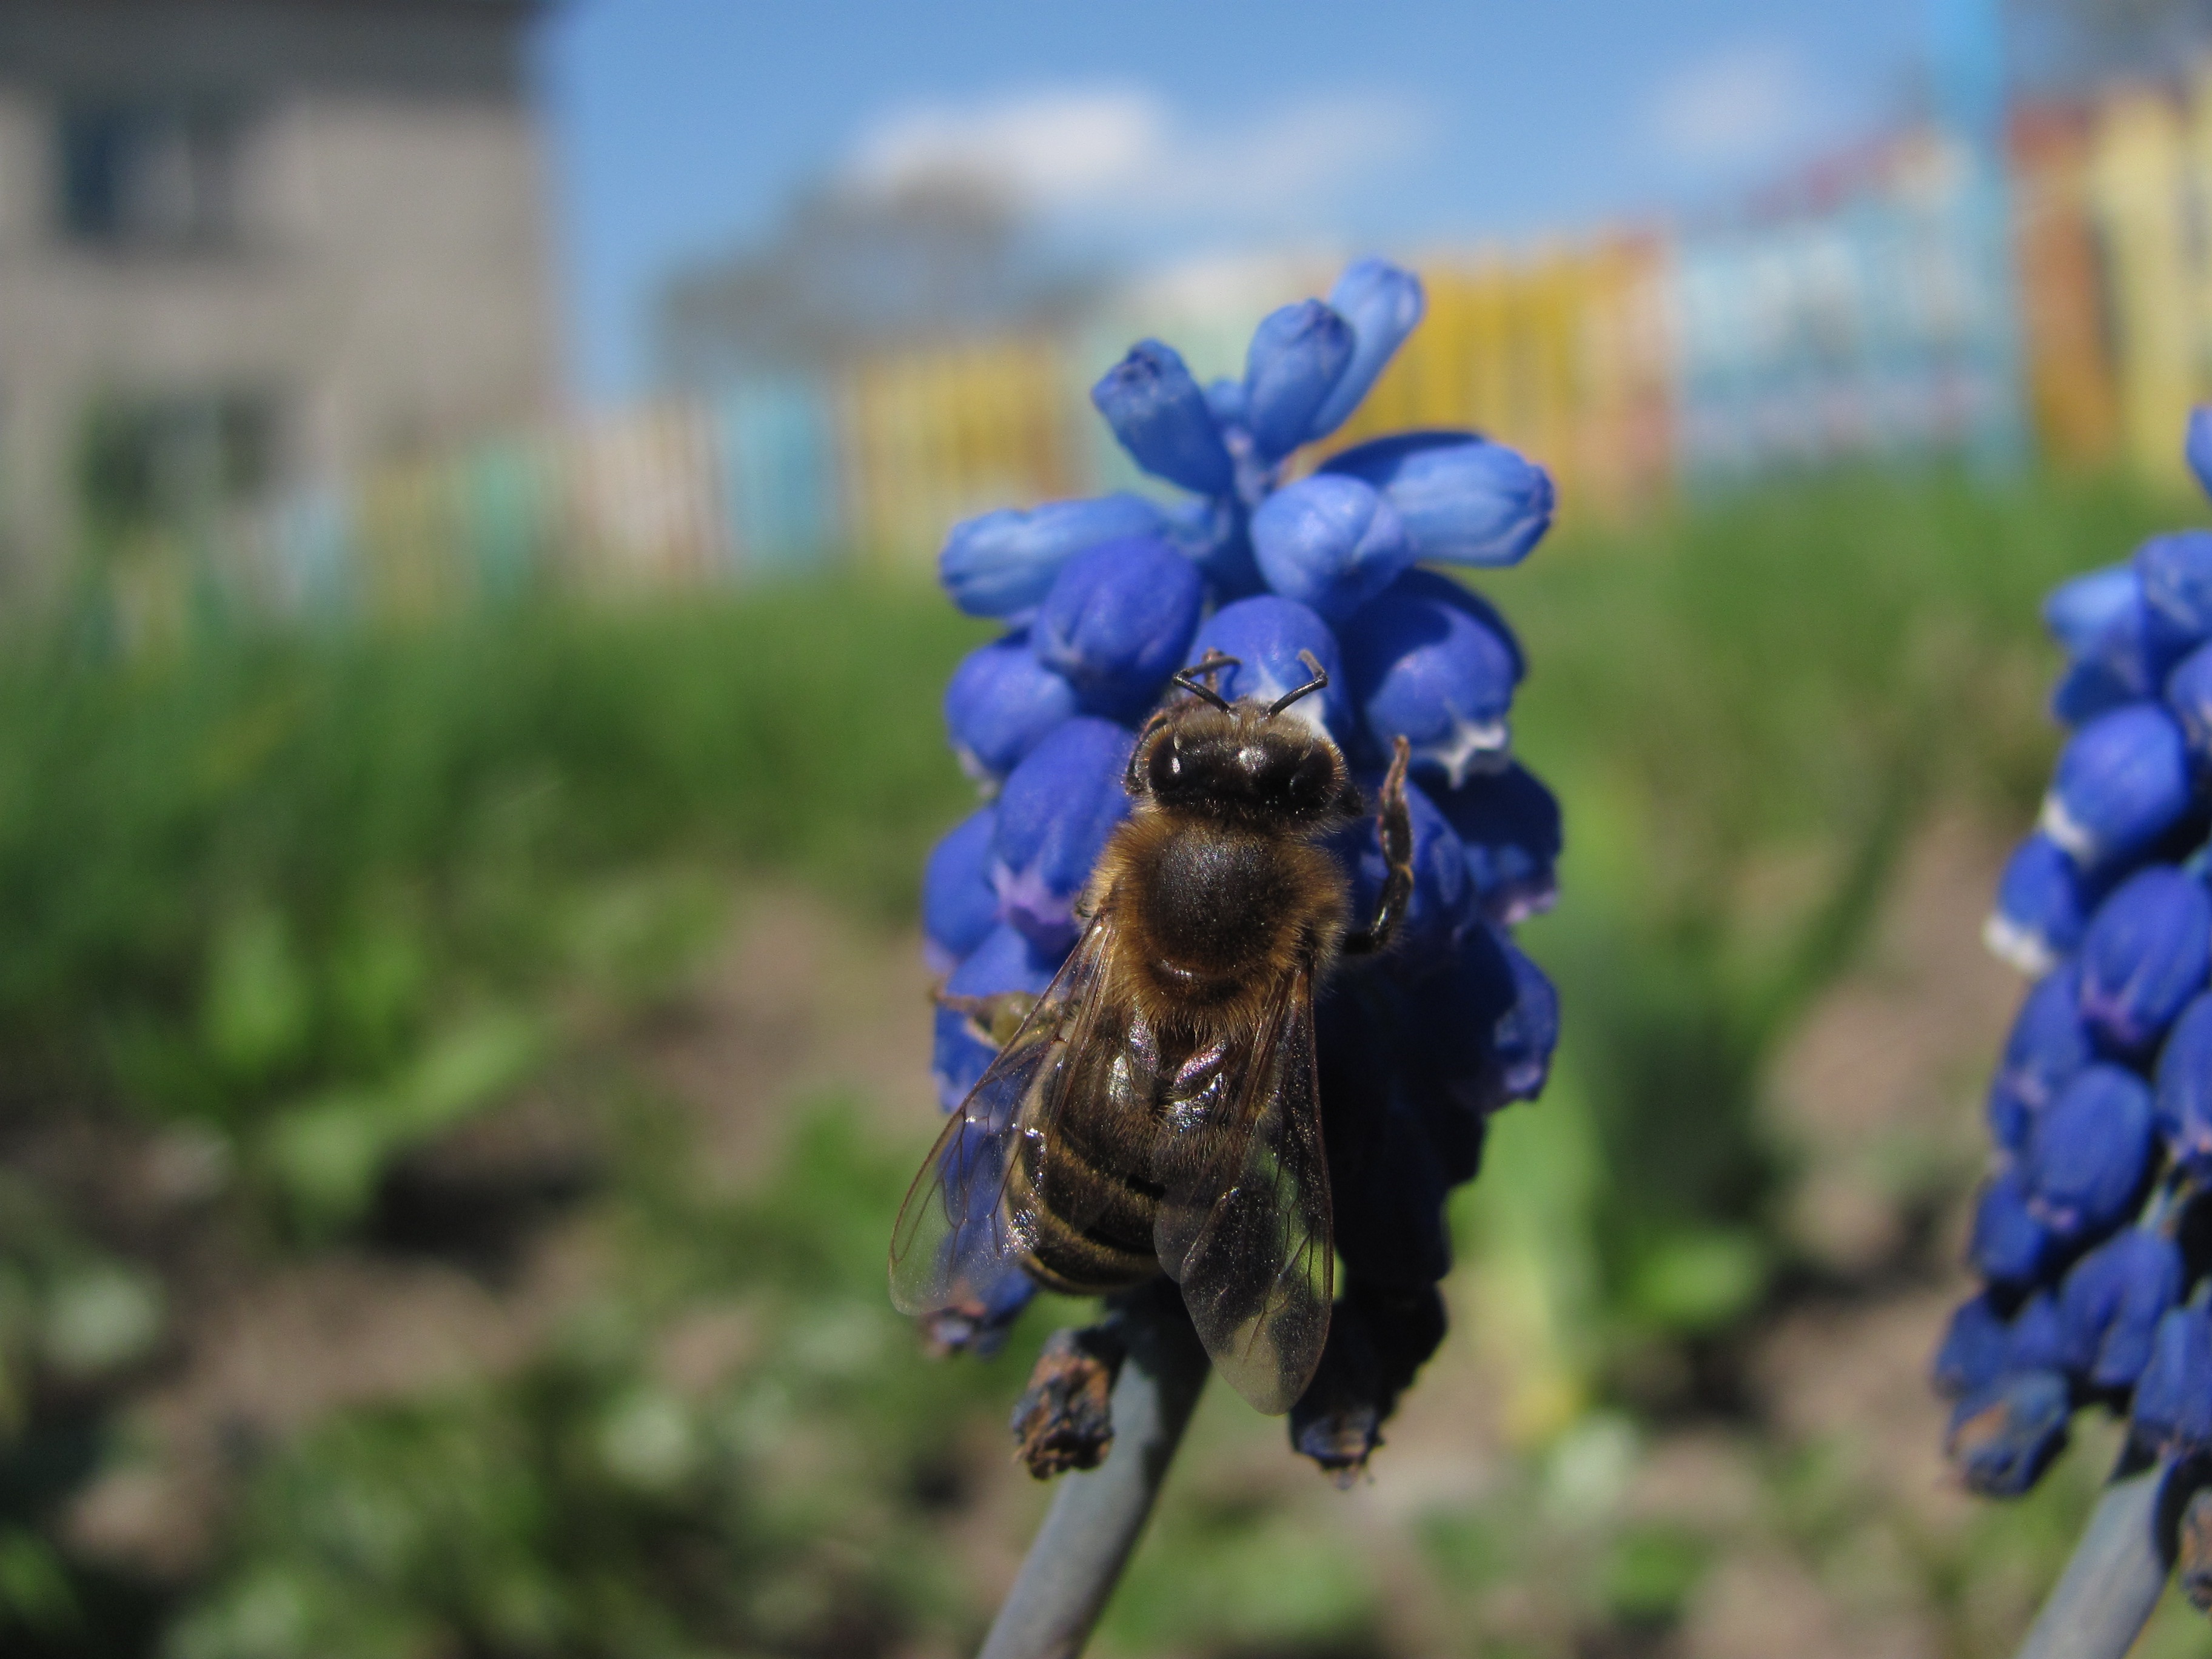 Honeybee on the flowers photo